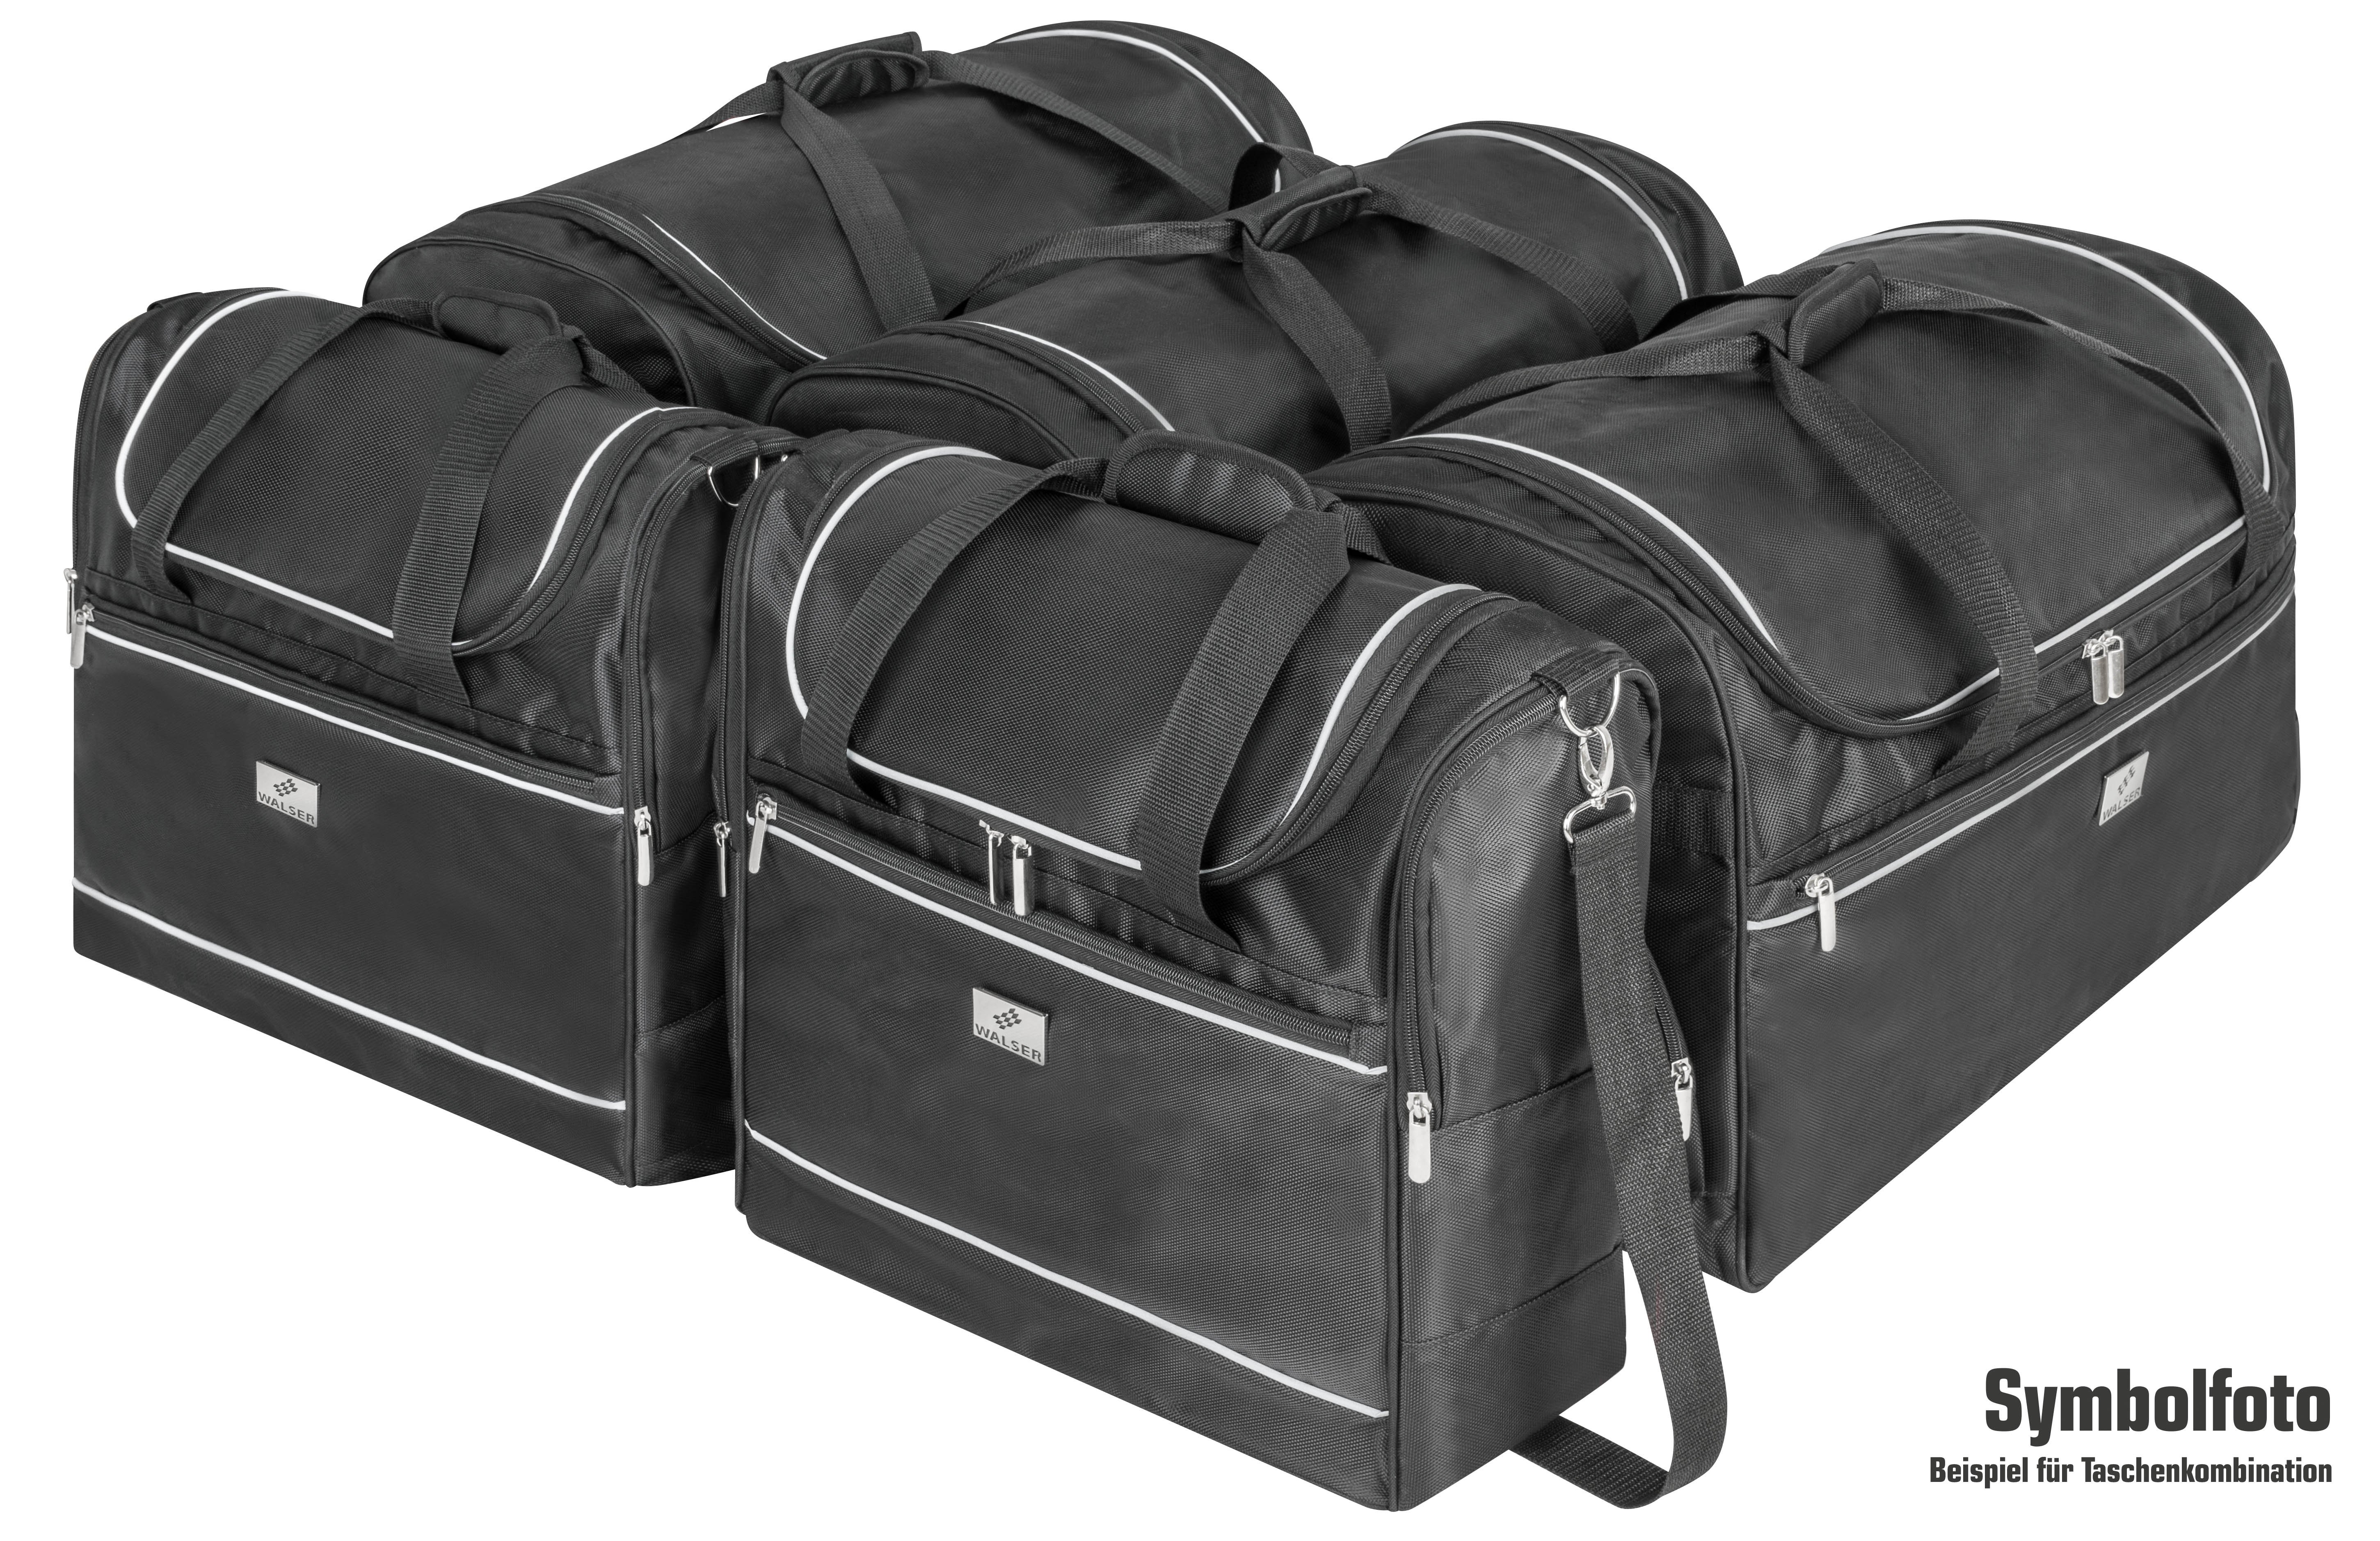 Carbags Travel Bag Set for Skoda Octavia Kombi III black